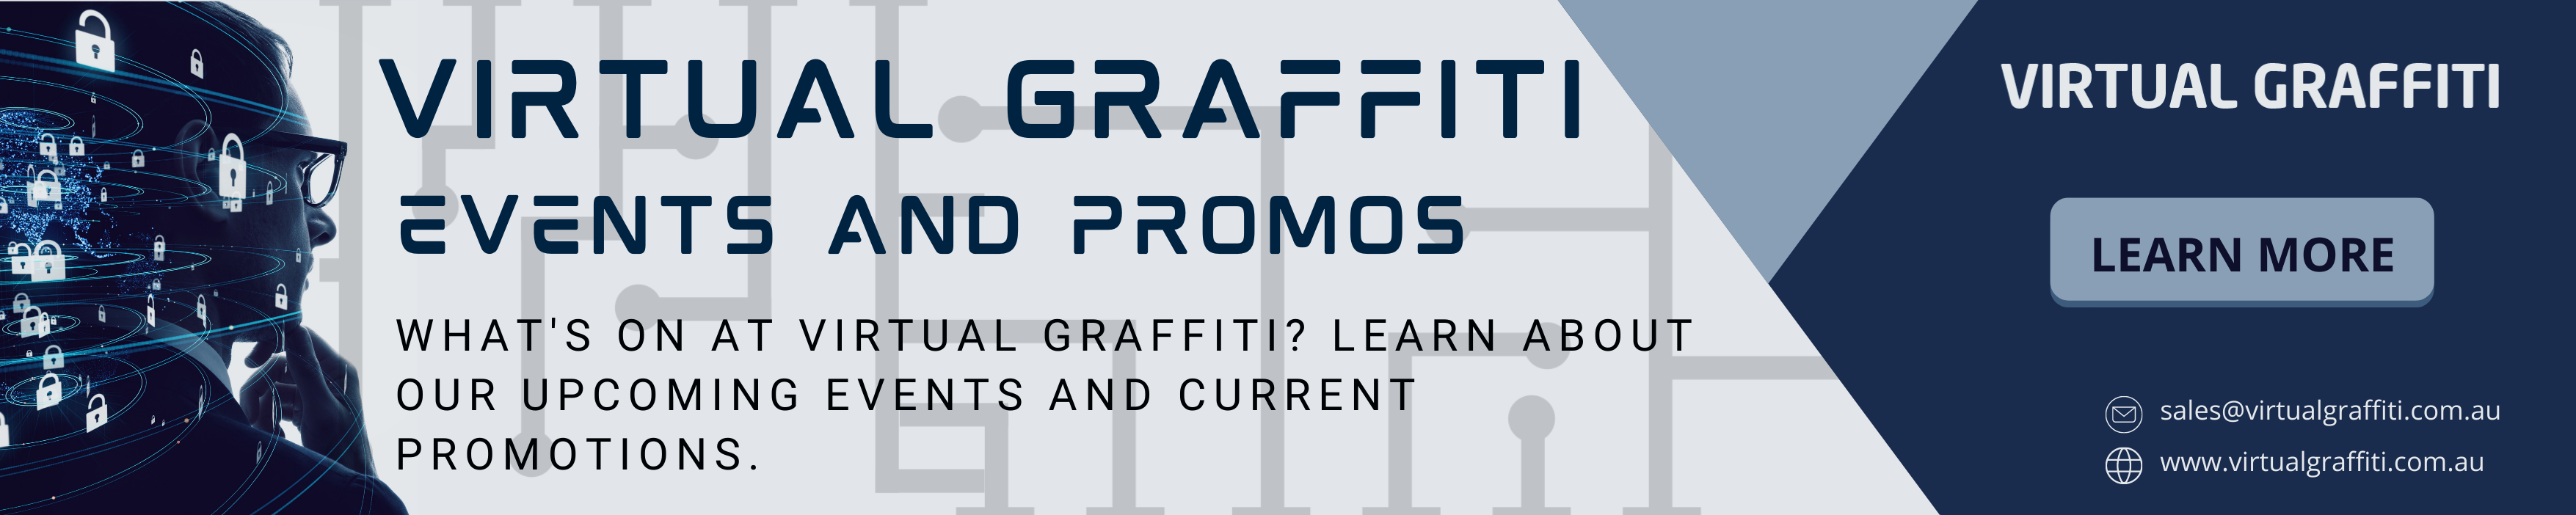 Virtual Graffiti Events and Promos